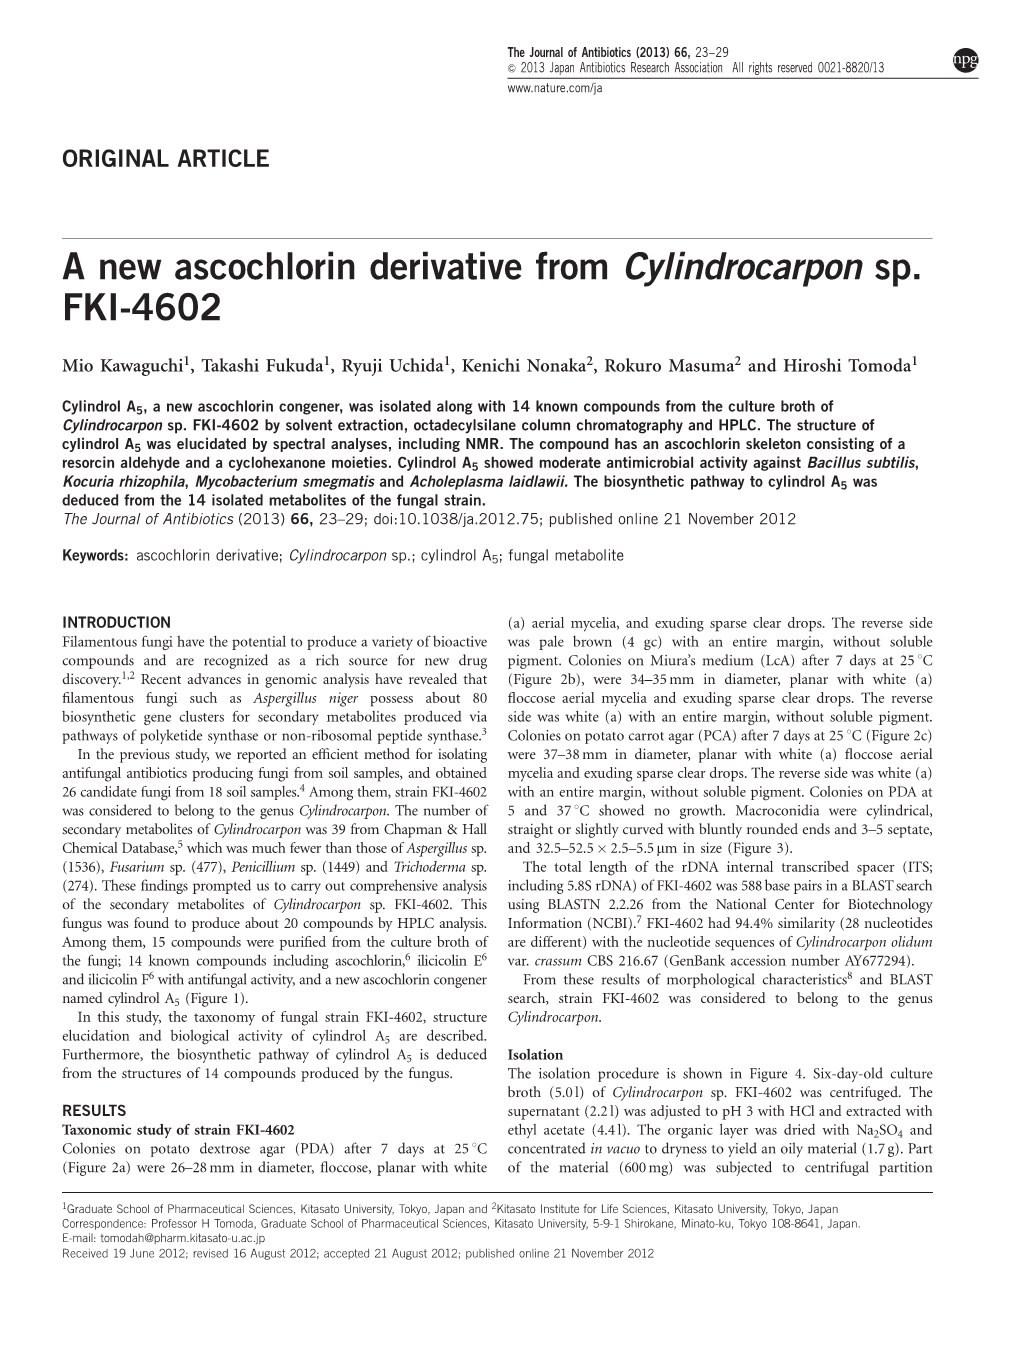 A New Ascochlorin Derivative from Cylindrocarpon Sp. FKI-4602